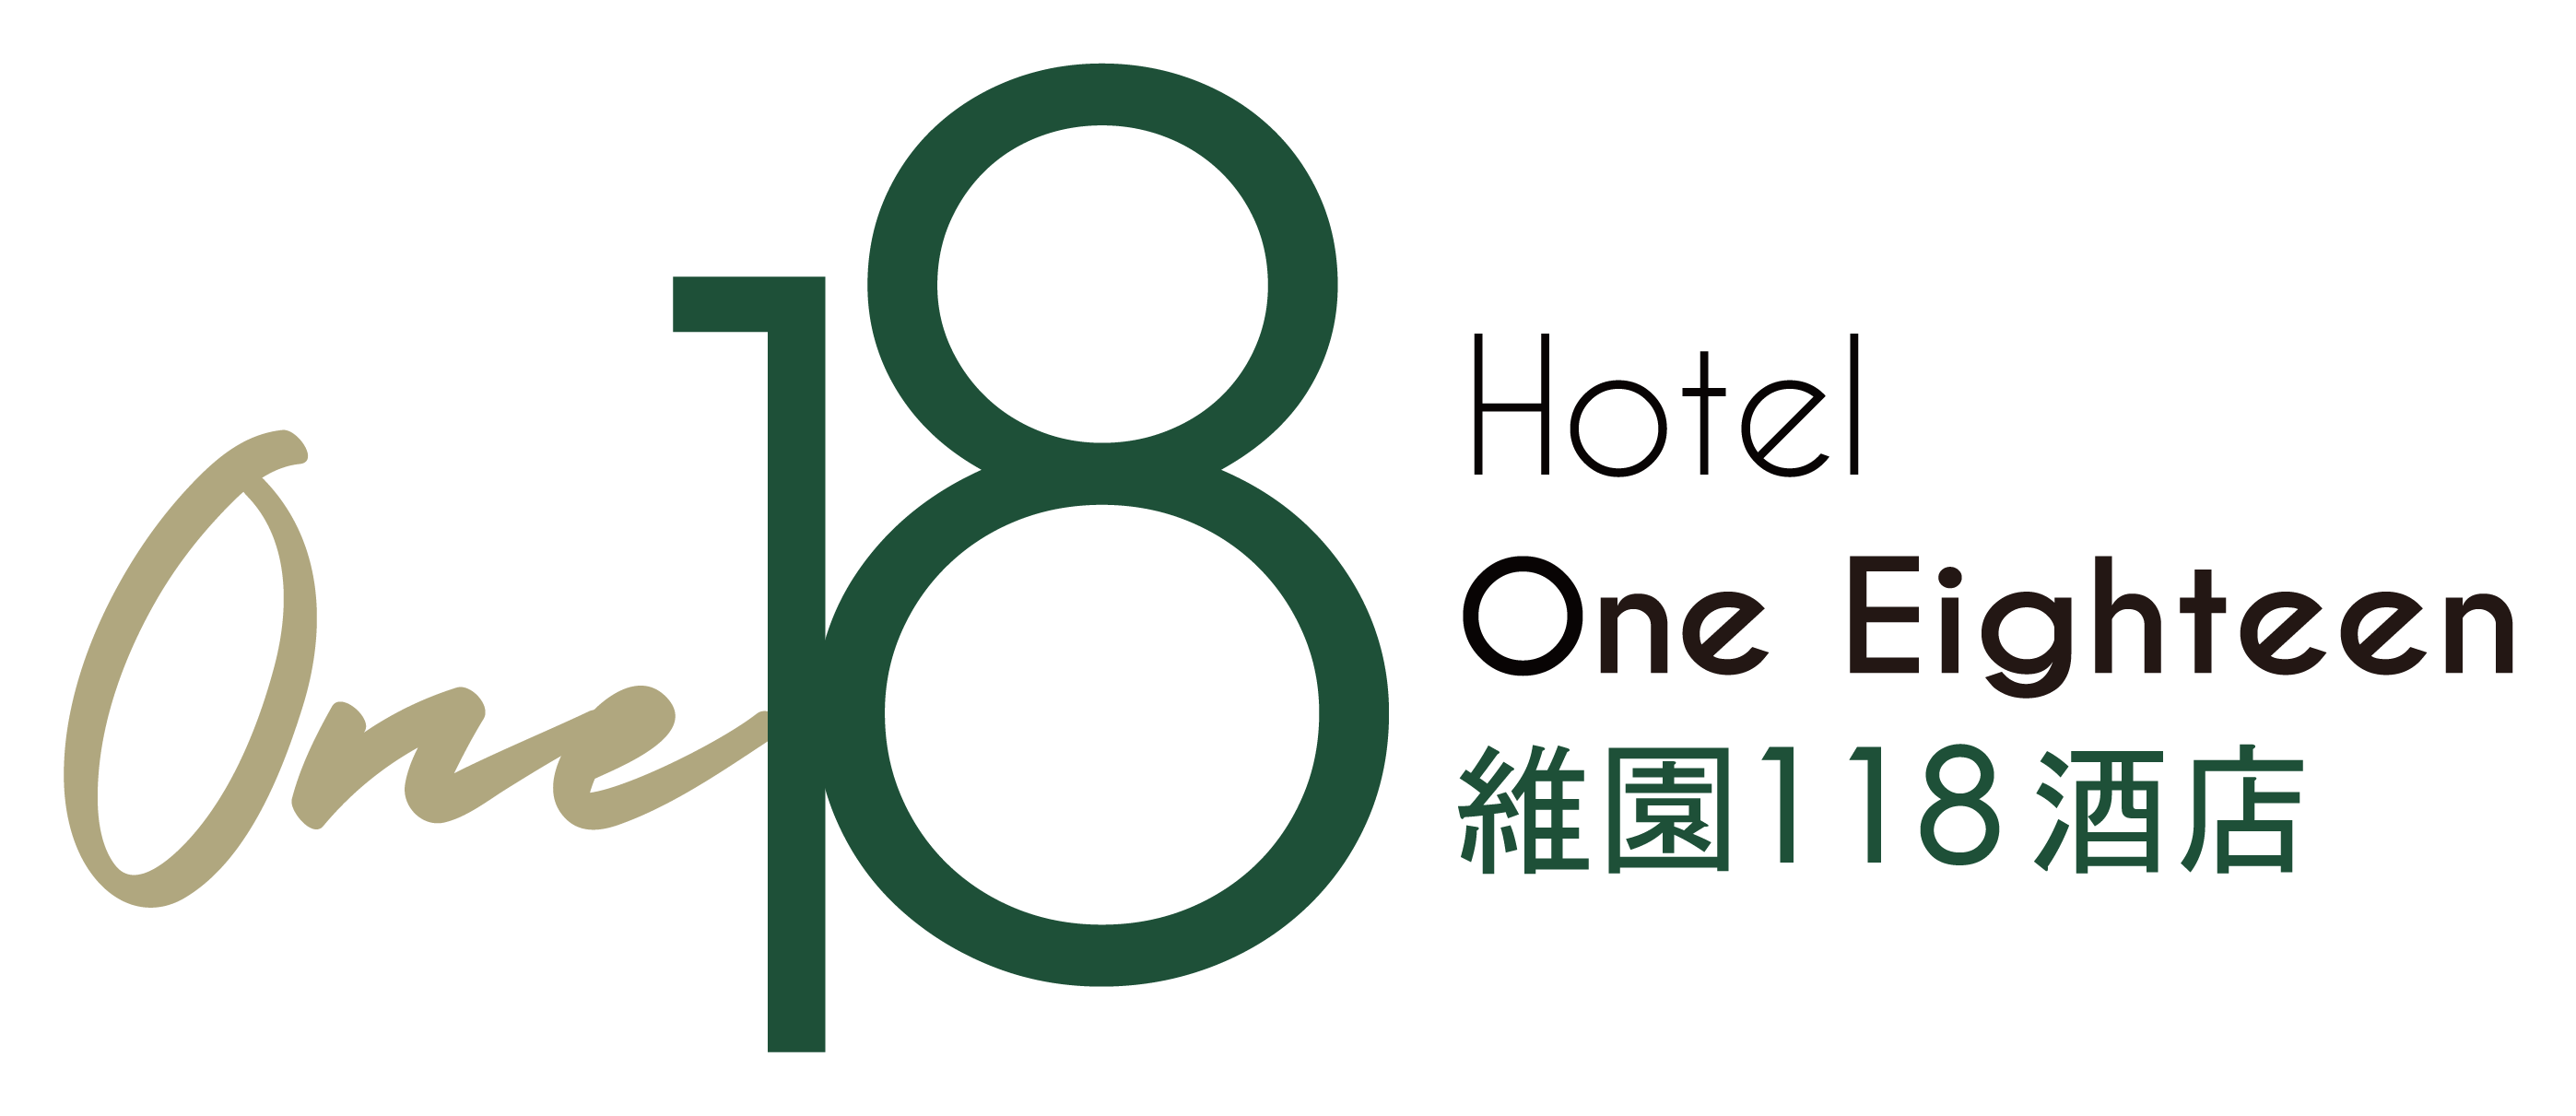 Hotel One Eighteen